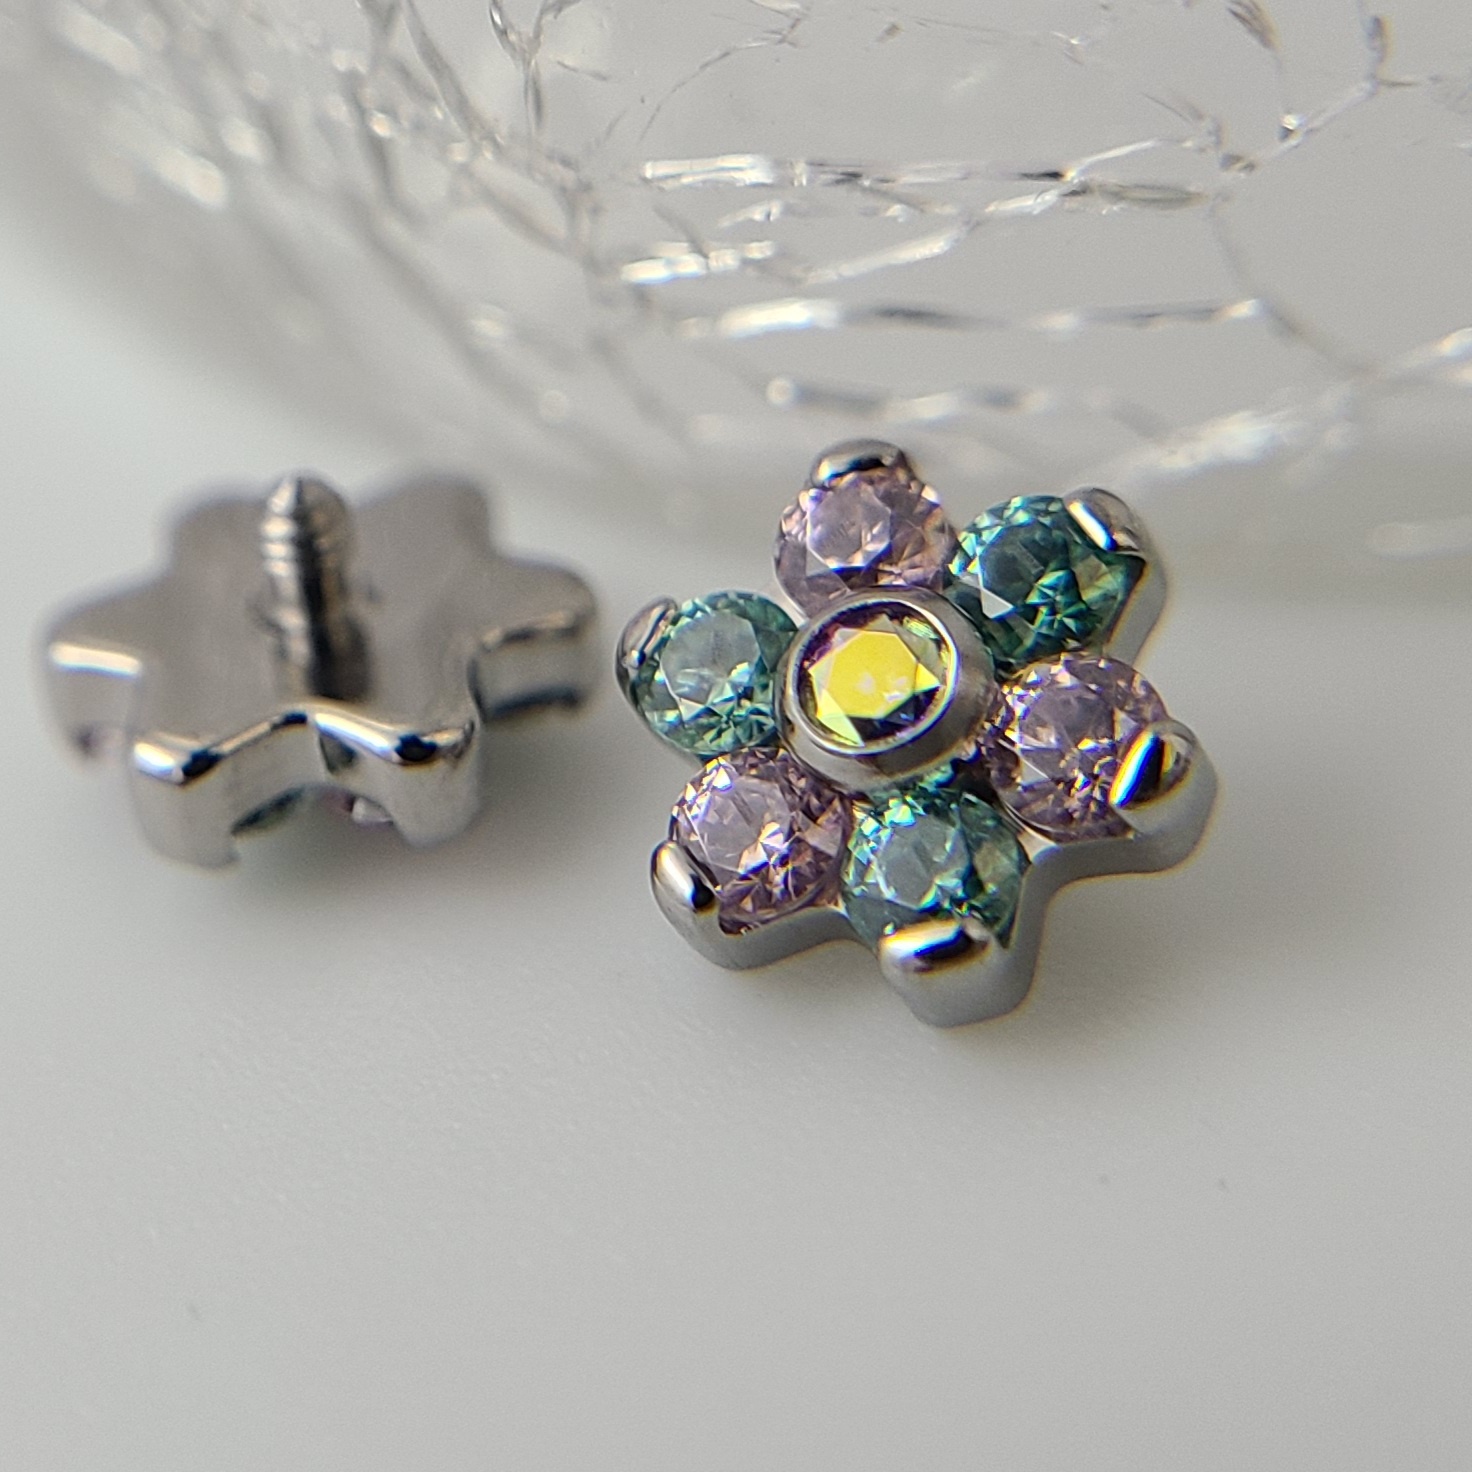 Gem Flower in Titanium - 2.0mm gems - 14g Threaded-3